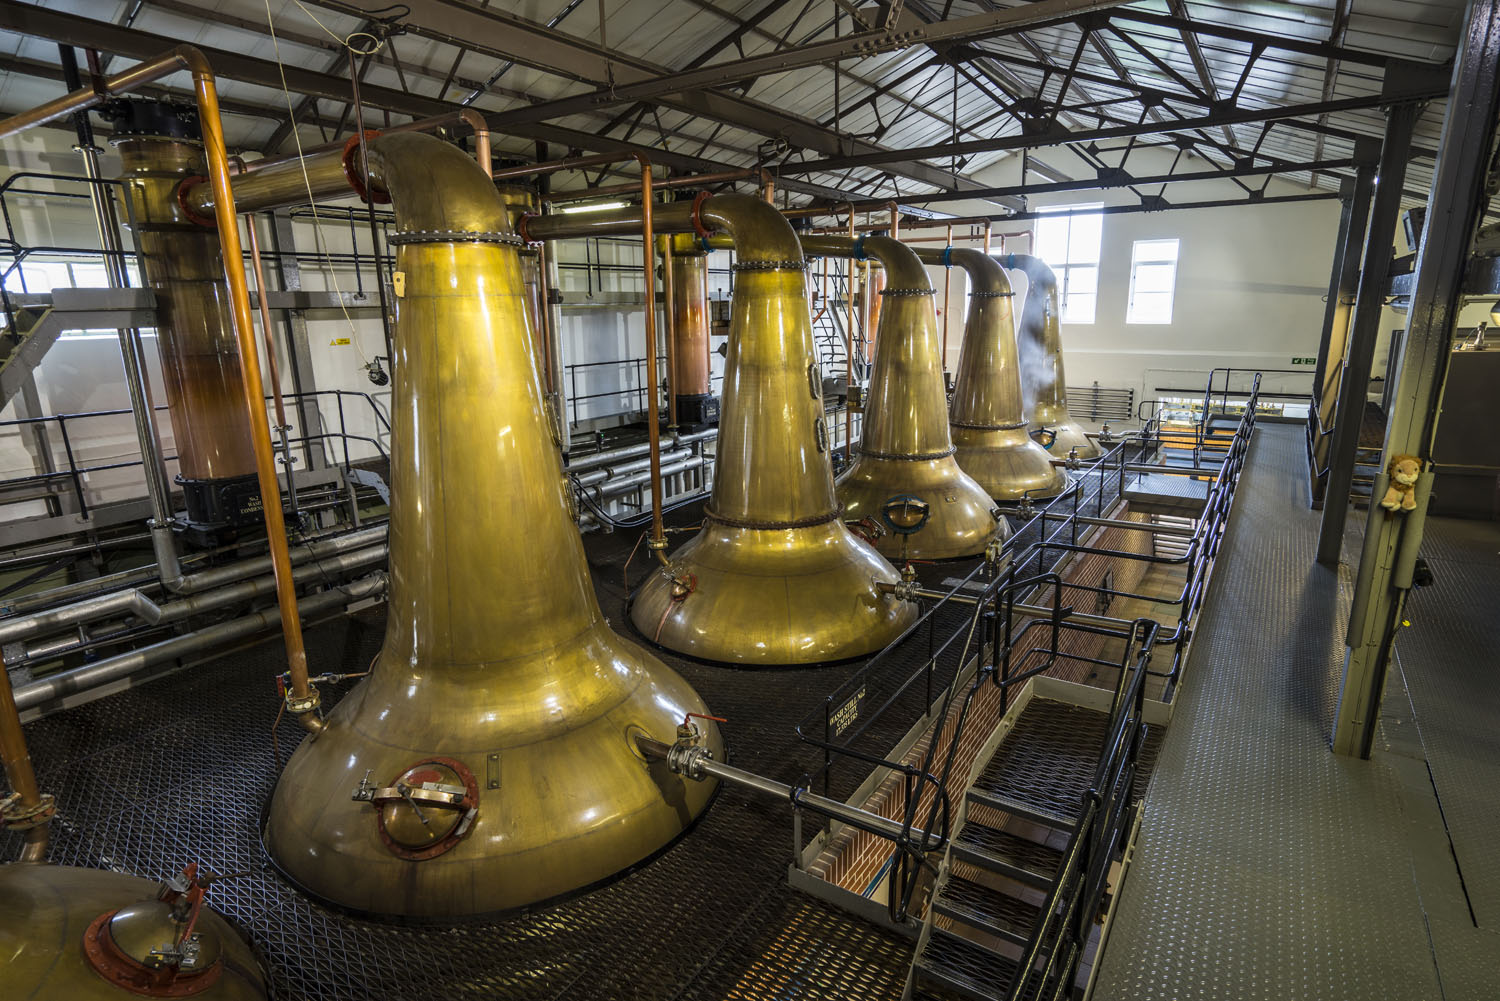 cragganmore distillery tour